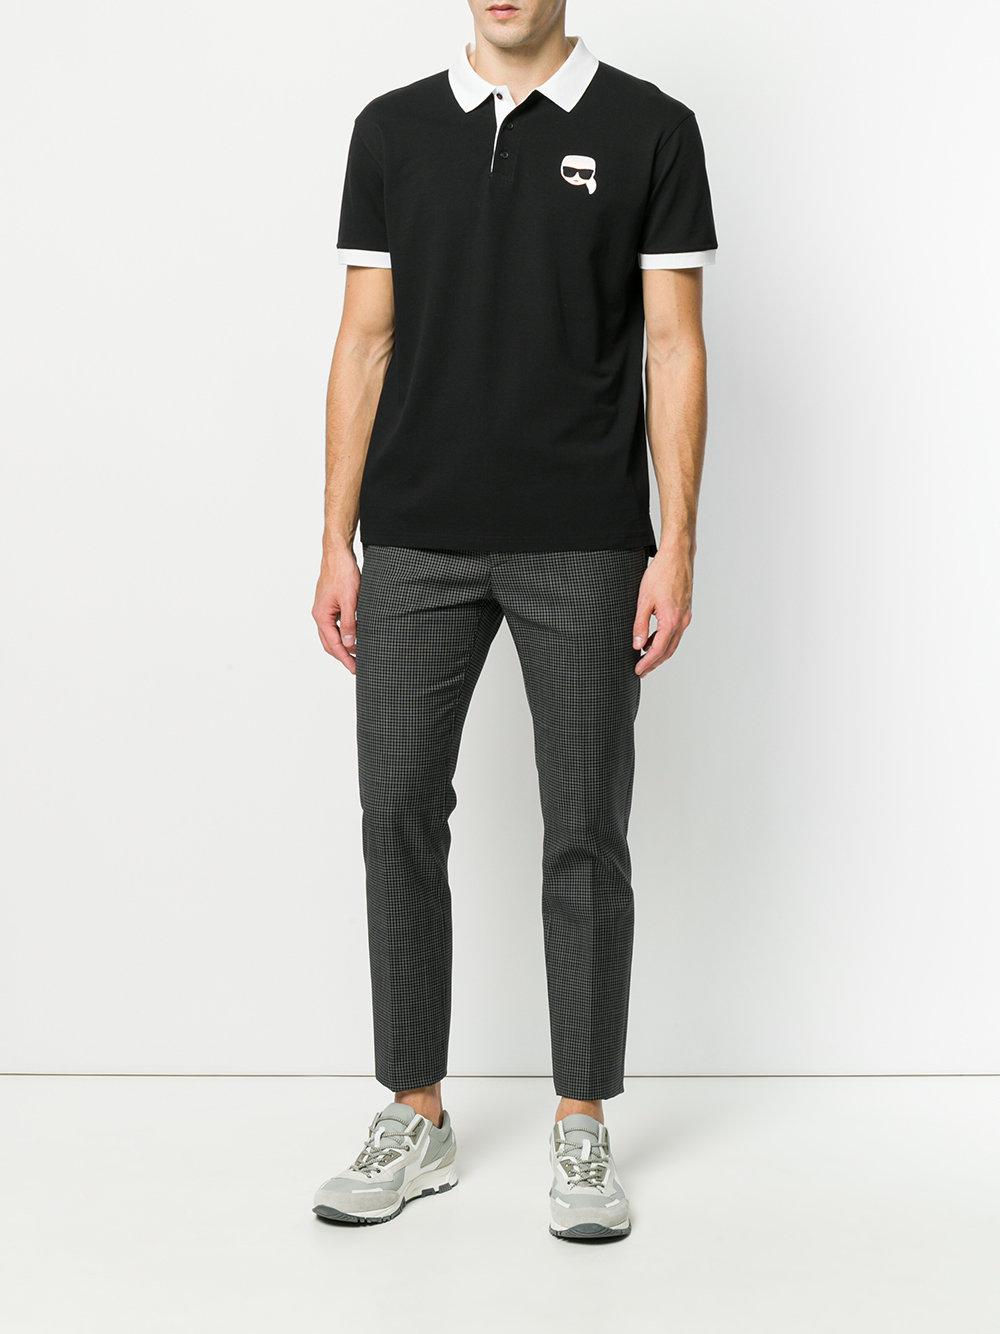 Karl Lagerfeld Cotton Karl Ikonik Polo Shirt in Black for Men - Lyst